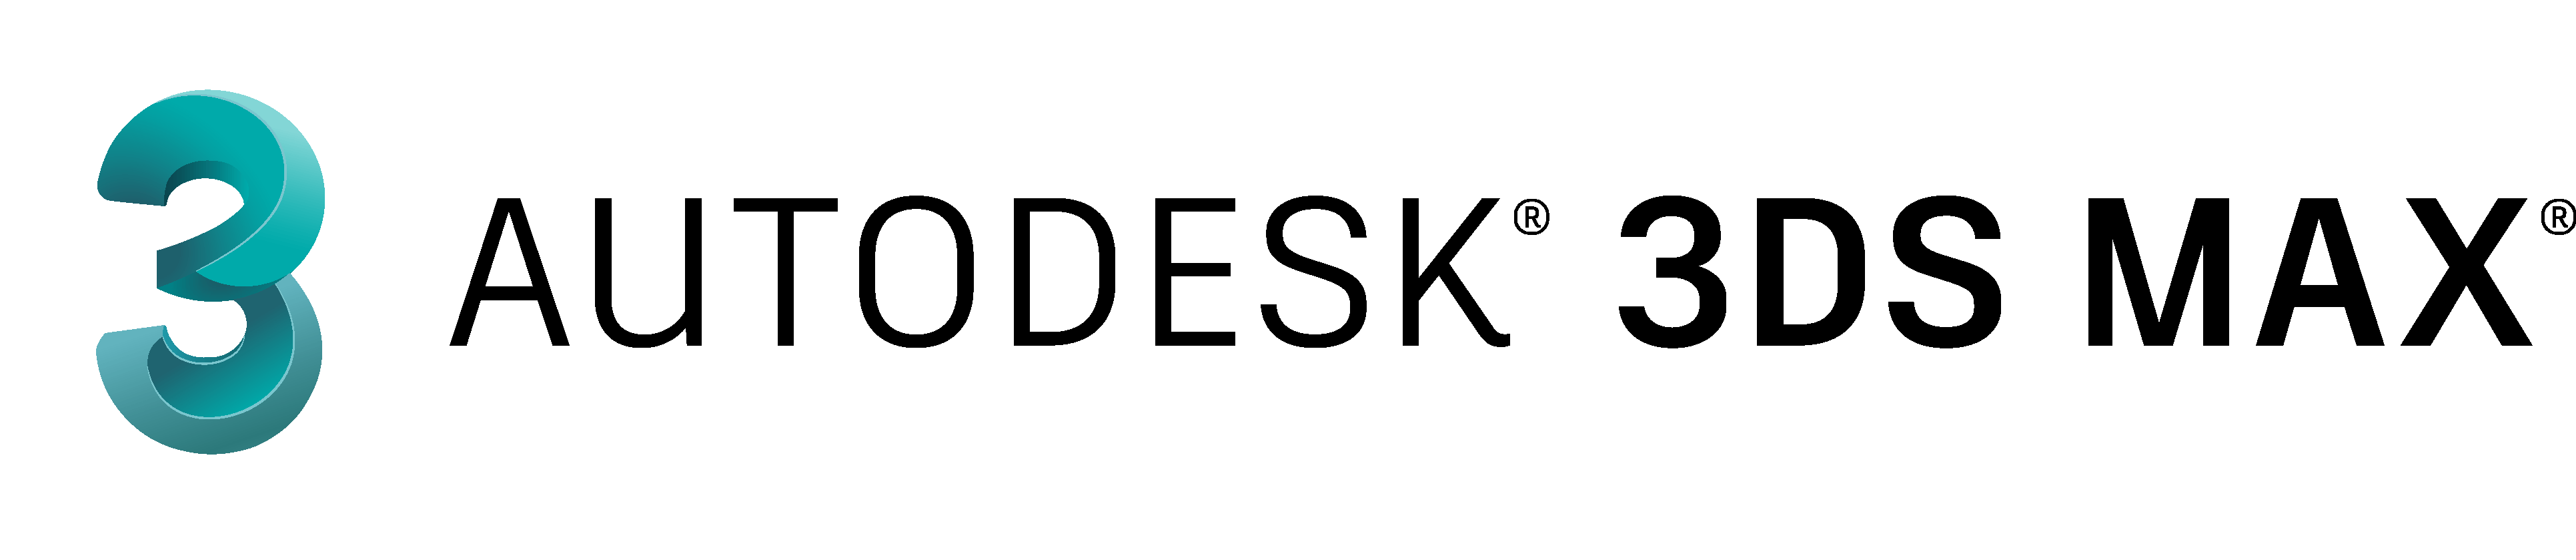 Autodesk 3d Max logo. 3ds Max логотип. Autodesk 3ds Max лого. Значок 3ds Max 2021. Интернет операция 3ds